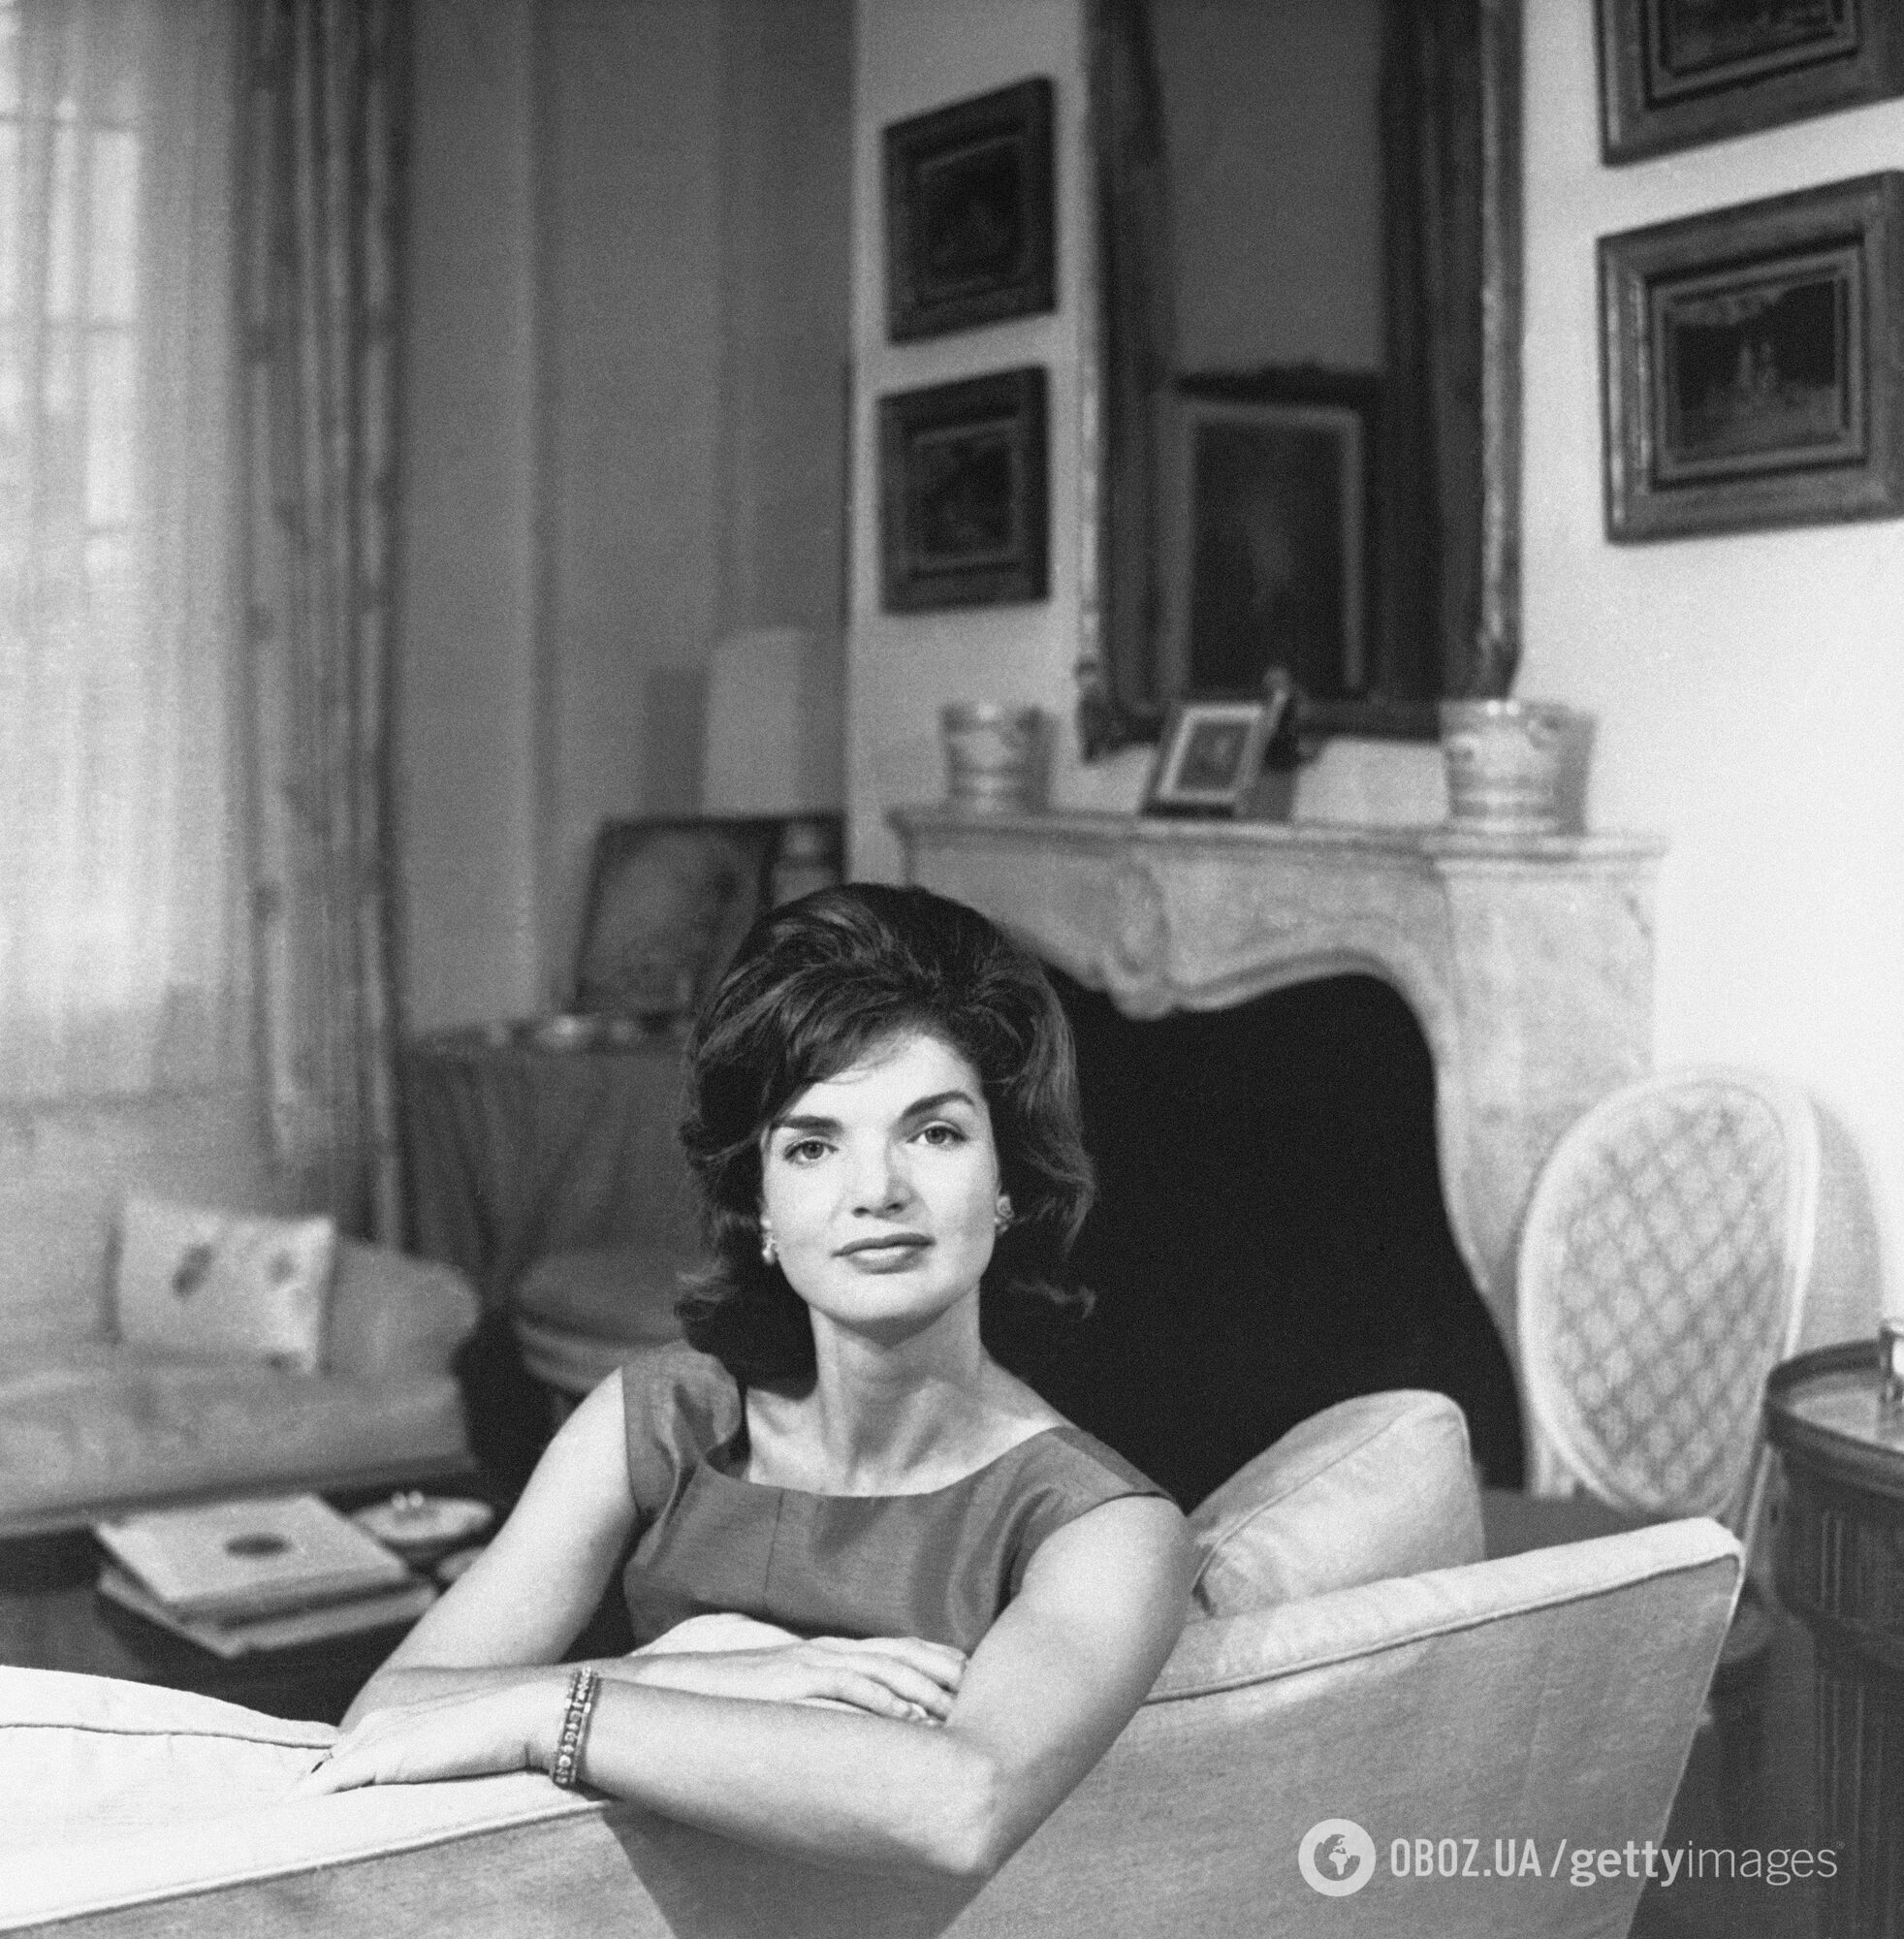 Жаклин Кеннеди, фото около 1960-х годов